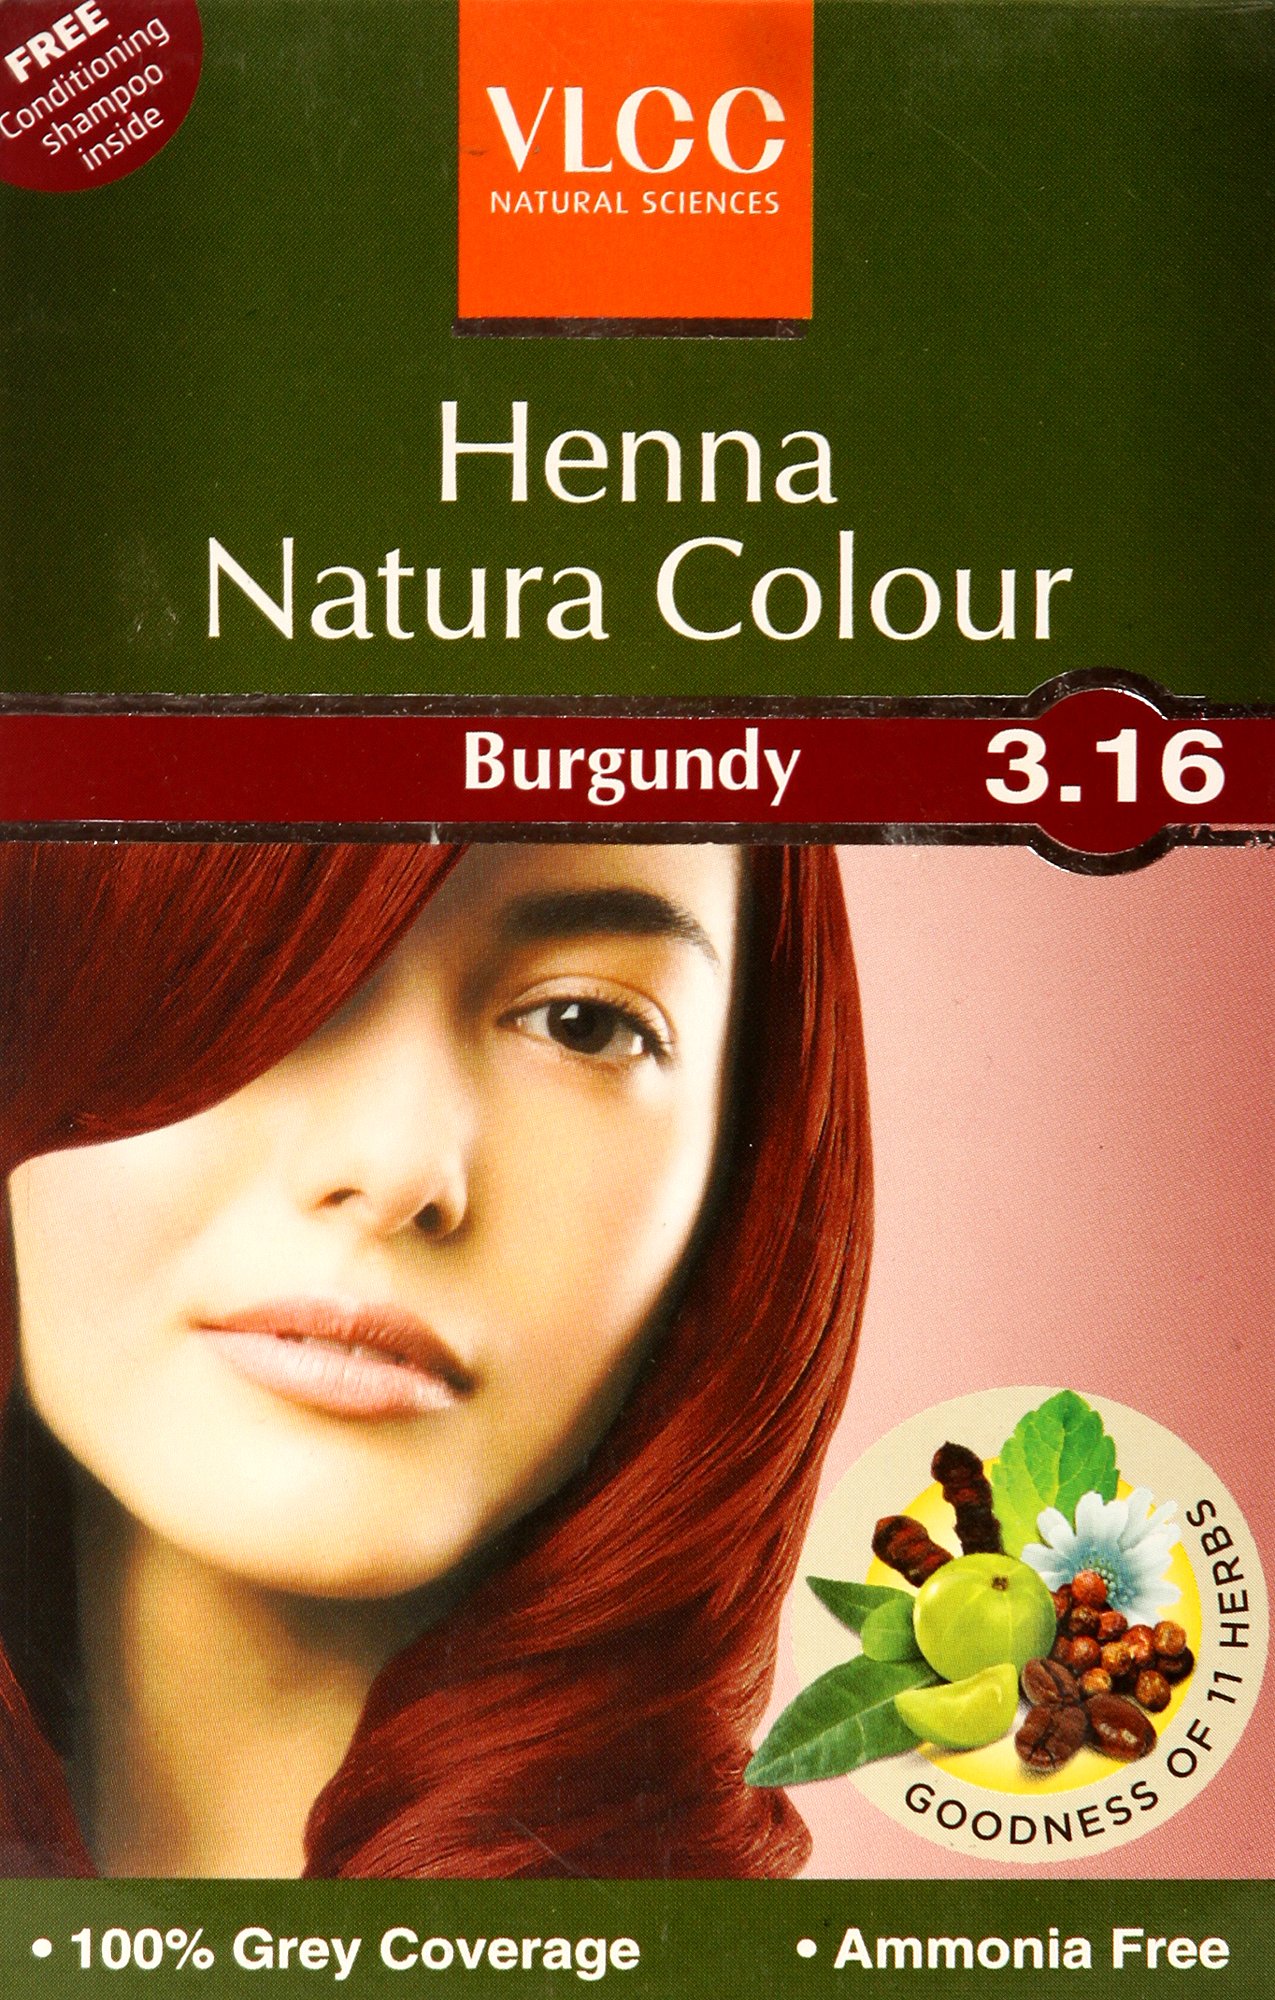 VLCC Henna Natura Colour-Burgundy - book cover